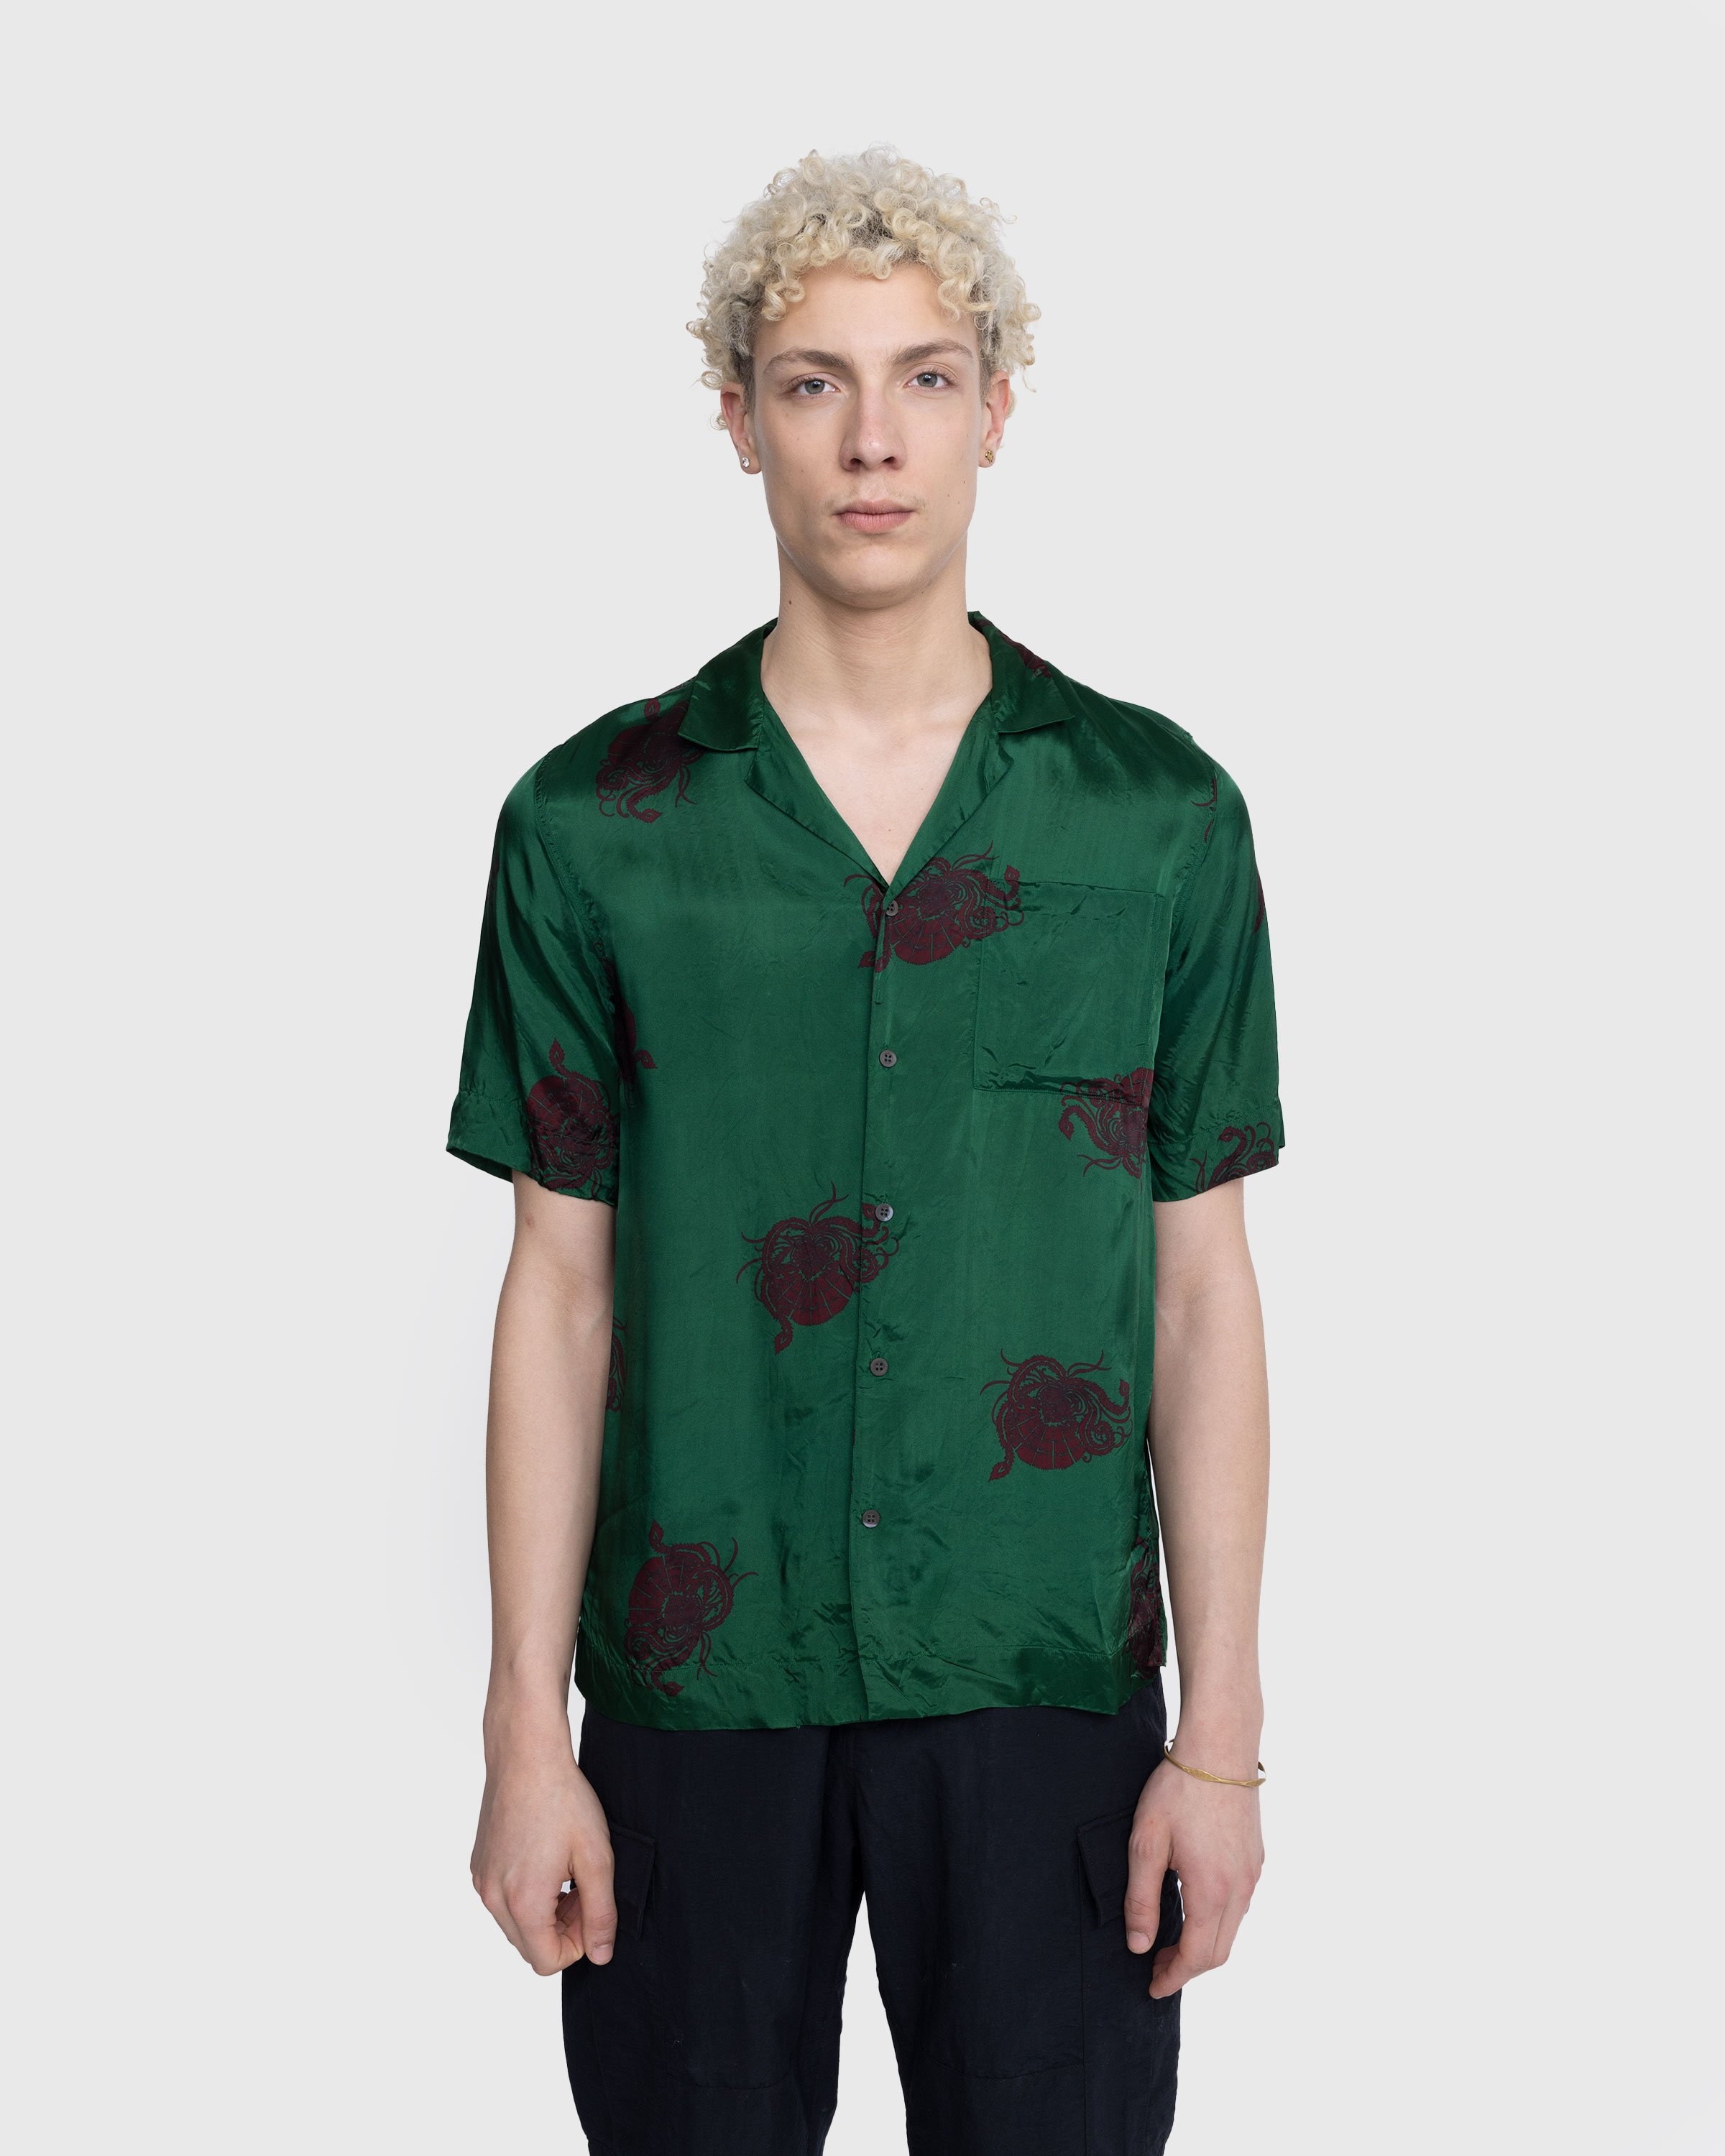 Dries van Noten – Carltone Shirt Bottle - Shirts - Green - Image 2